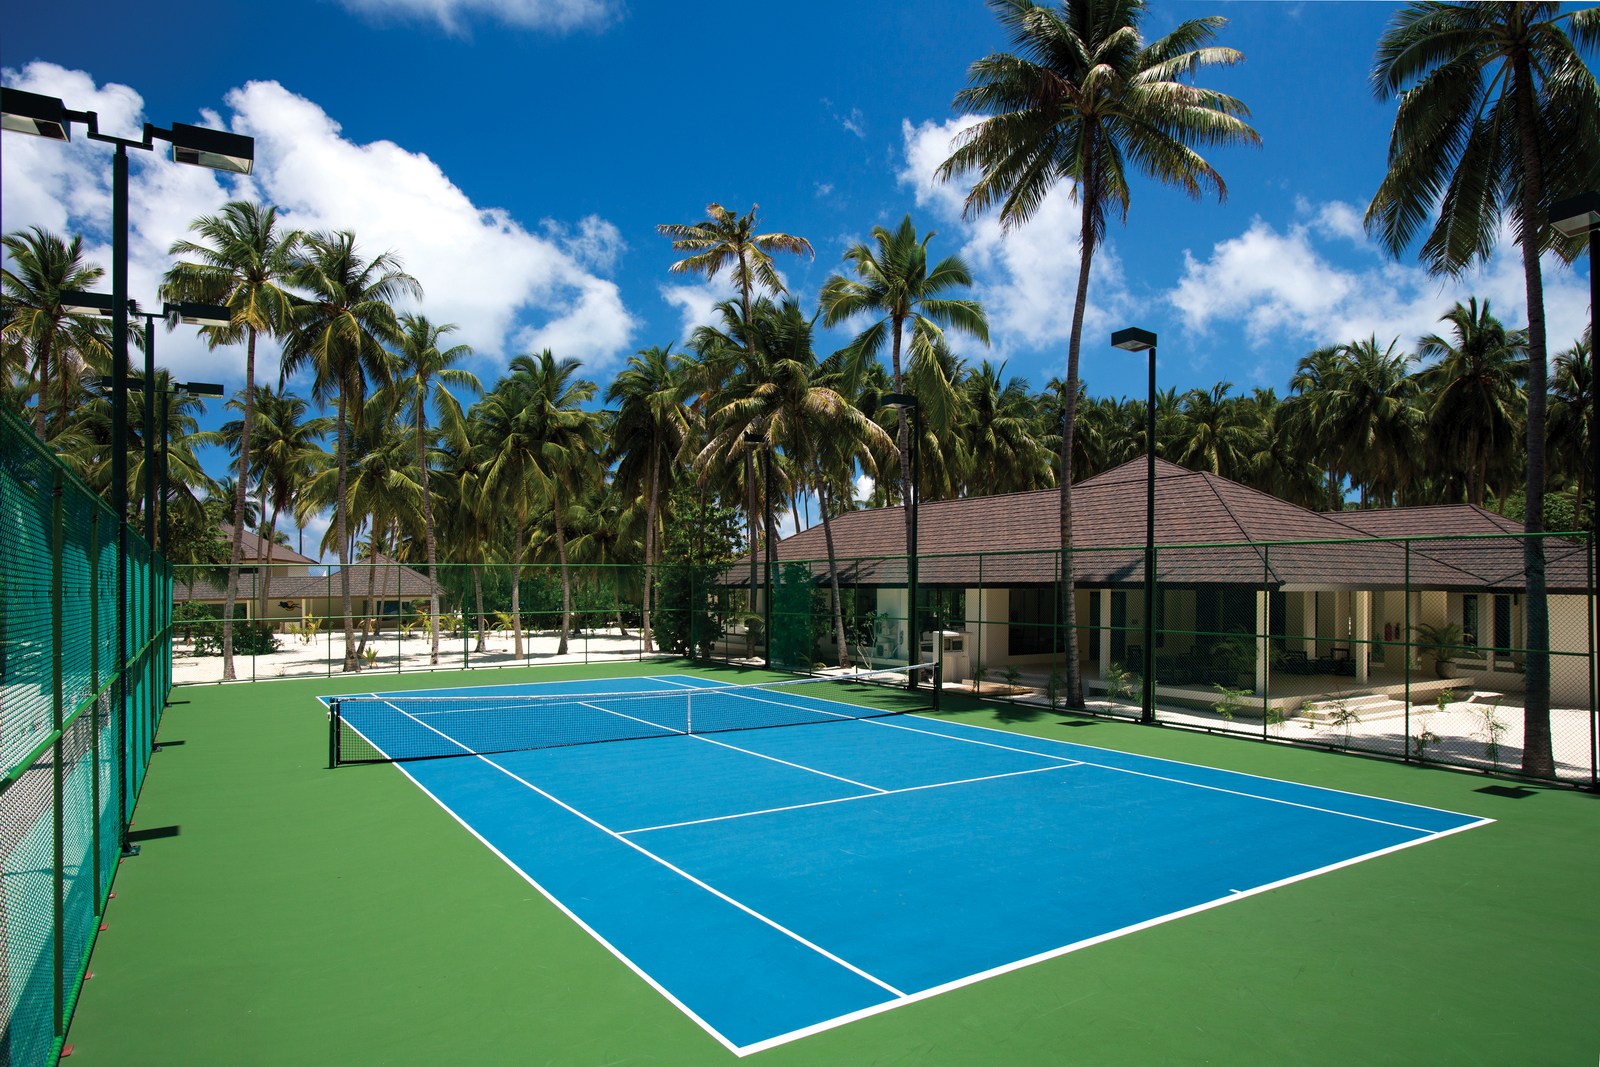 the tennis court of Atmosphere Kanifushi, Maldives